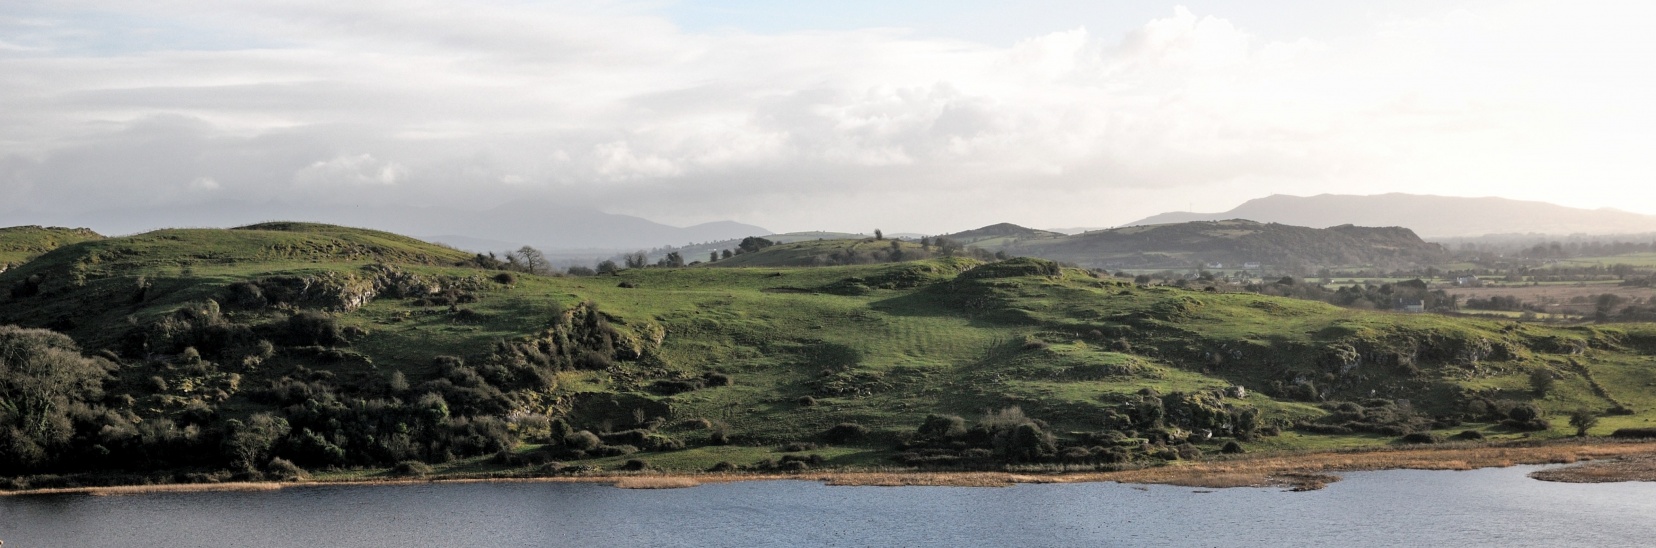 The Hills of Loch Gur